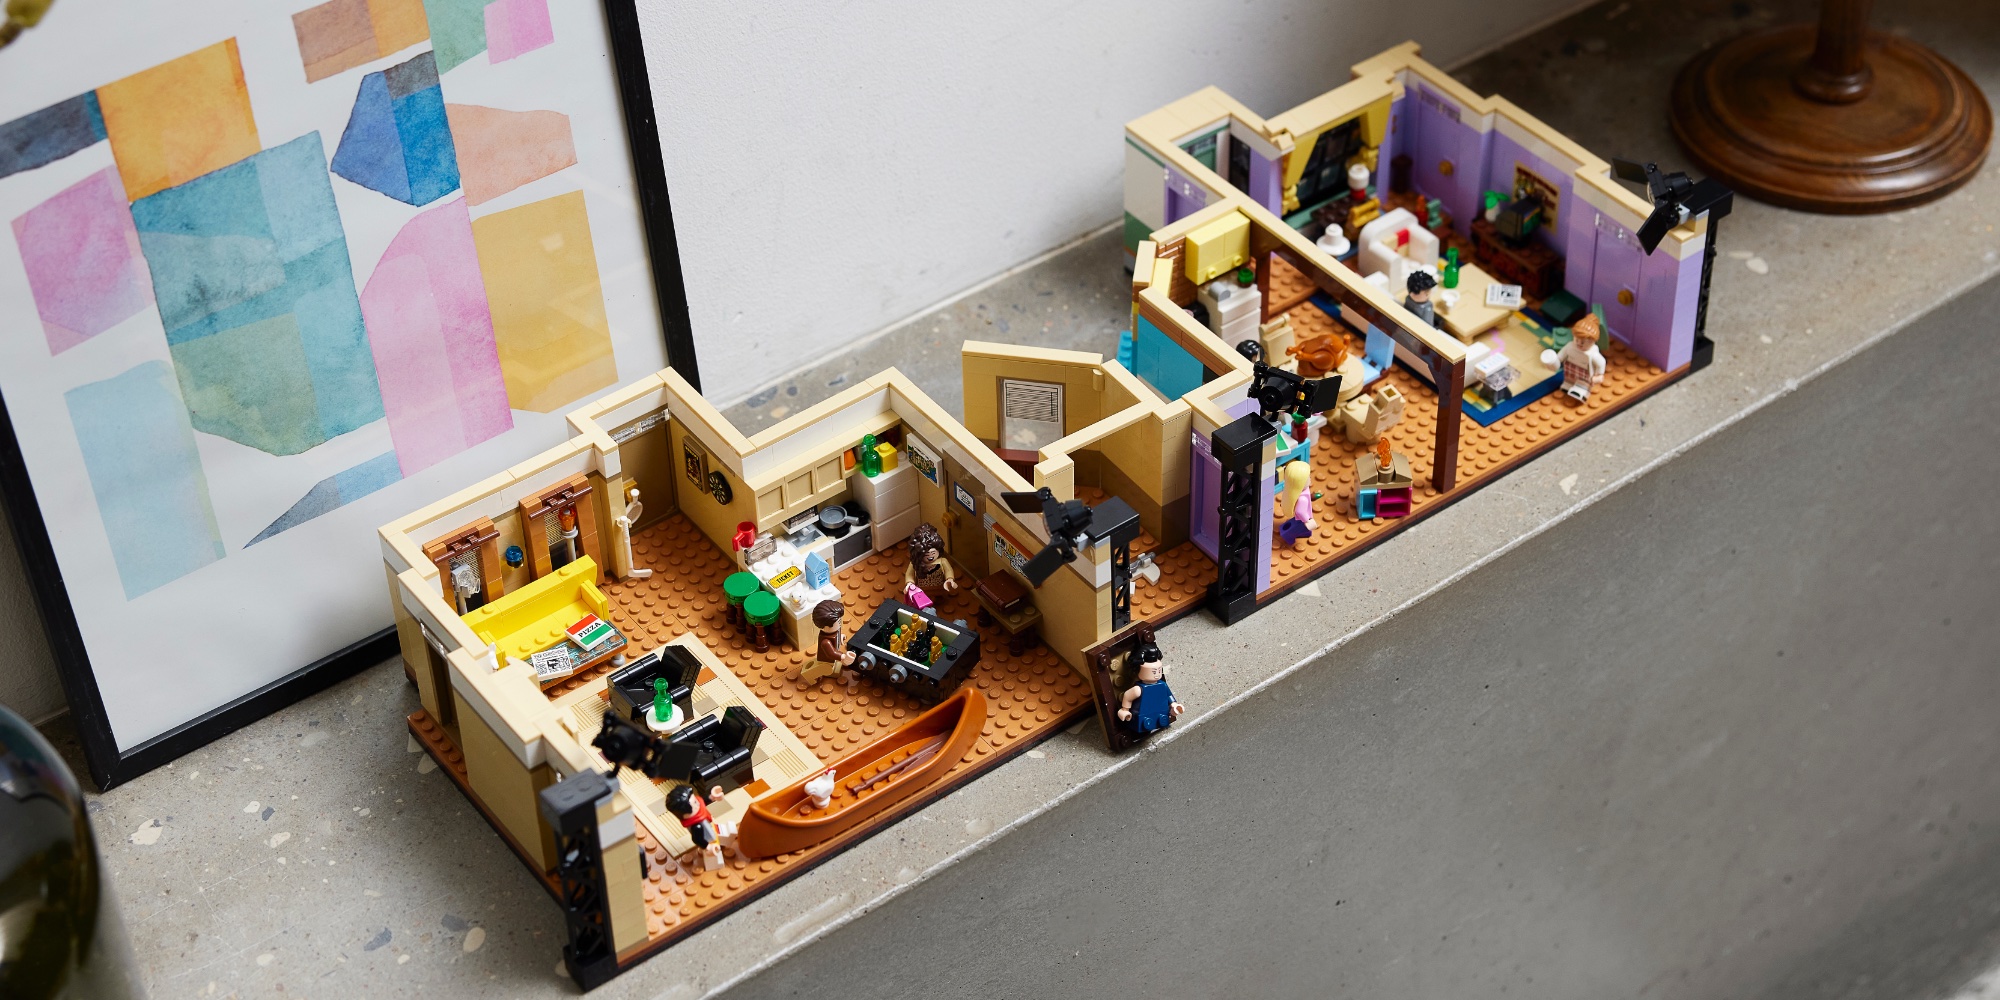 LEGO 'Friends' Apartment, Central Perk Set